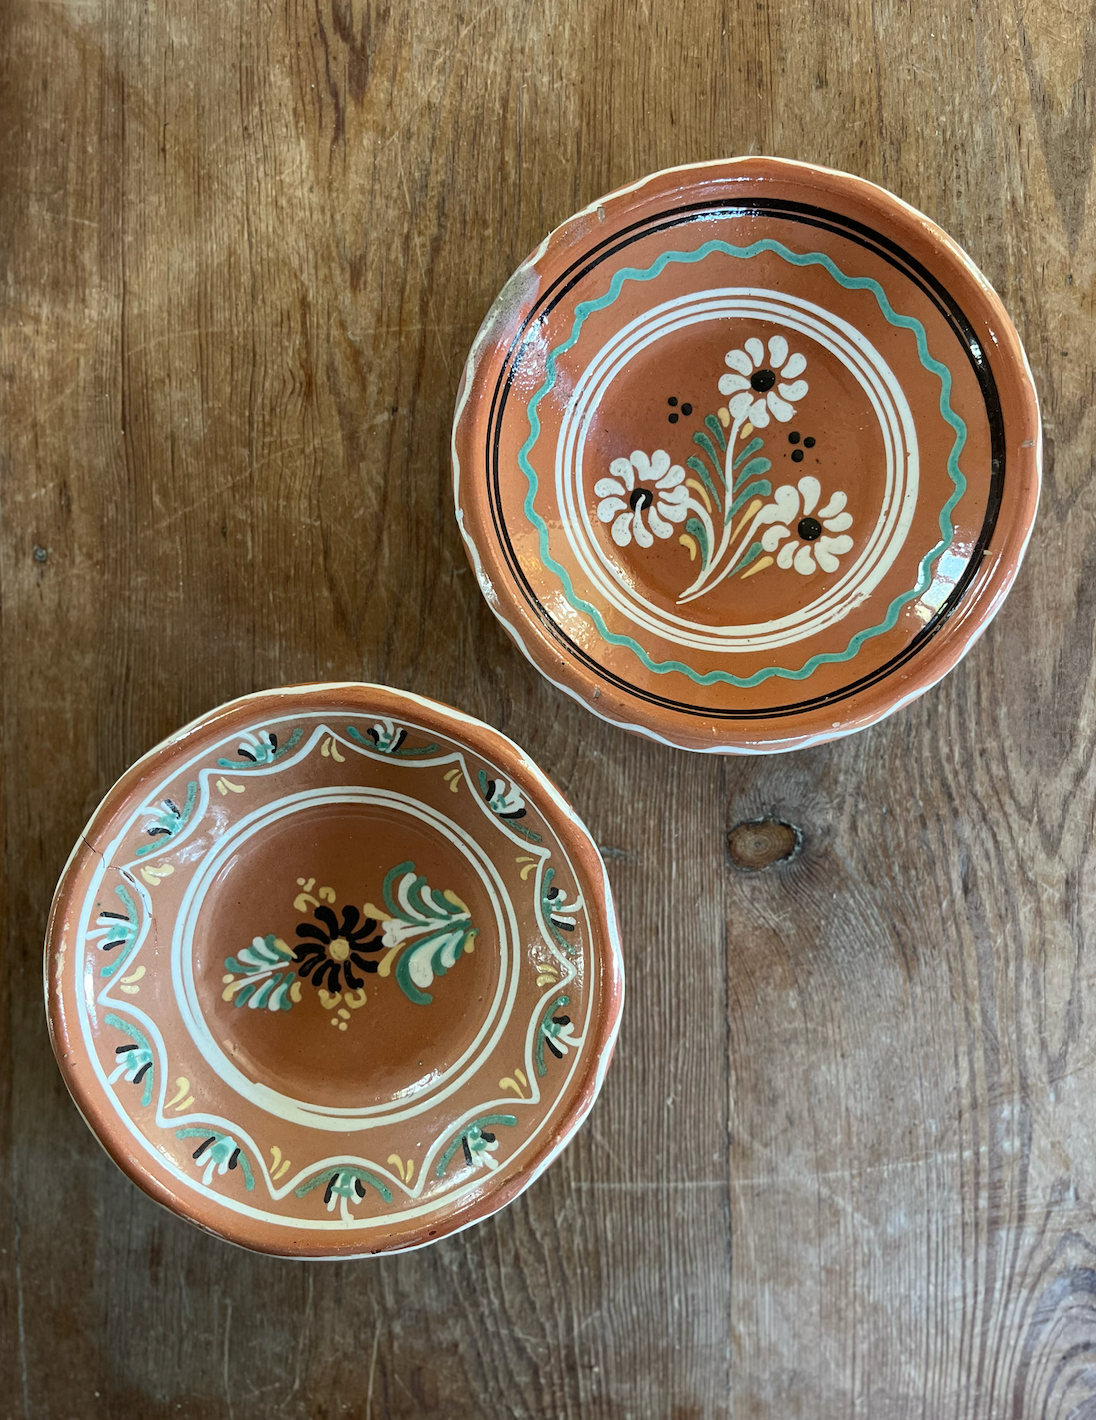 Cute Pair of Decorative Clay Rare & Antique Decorative Transylvanian Wall Plates